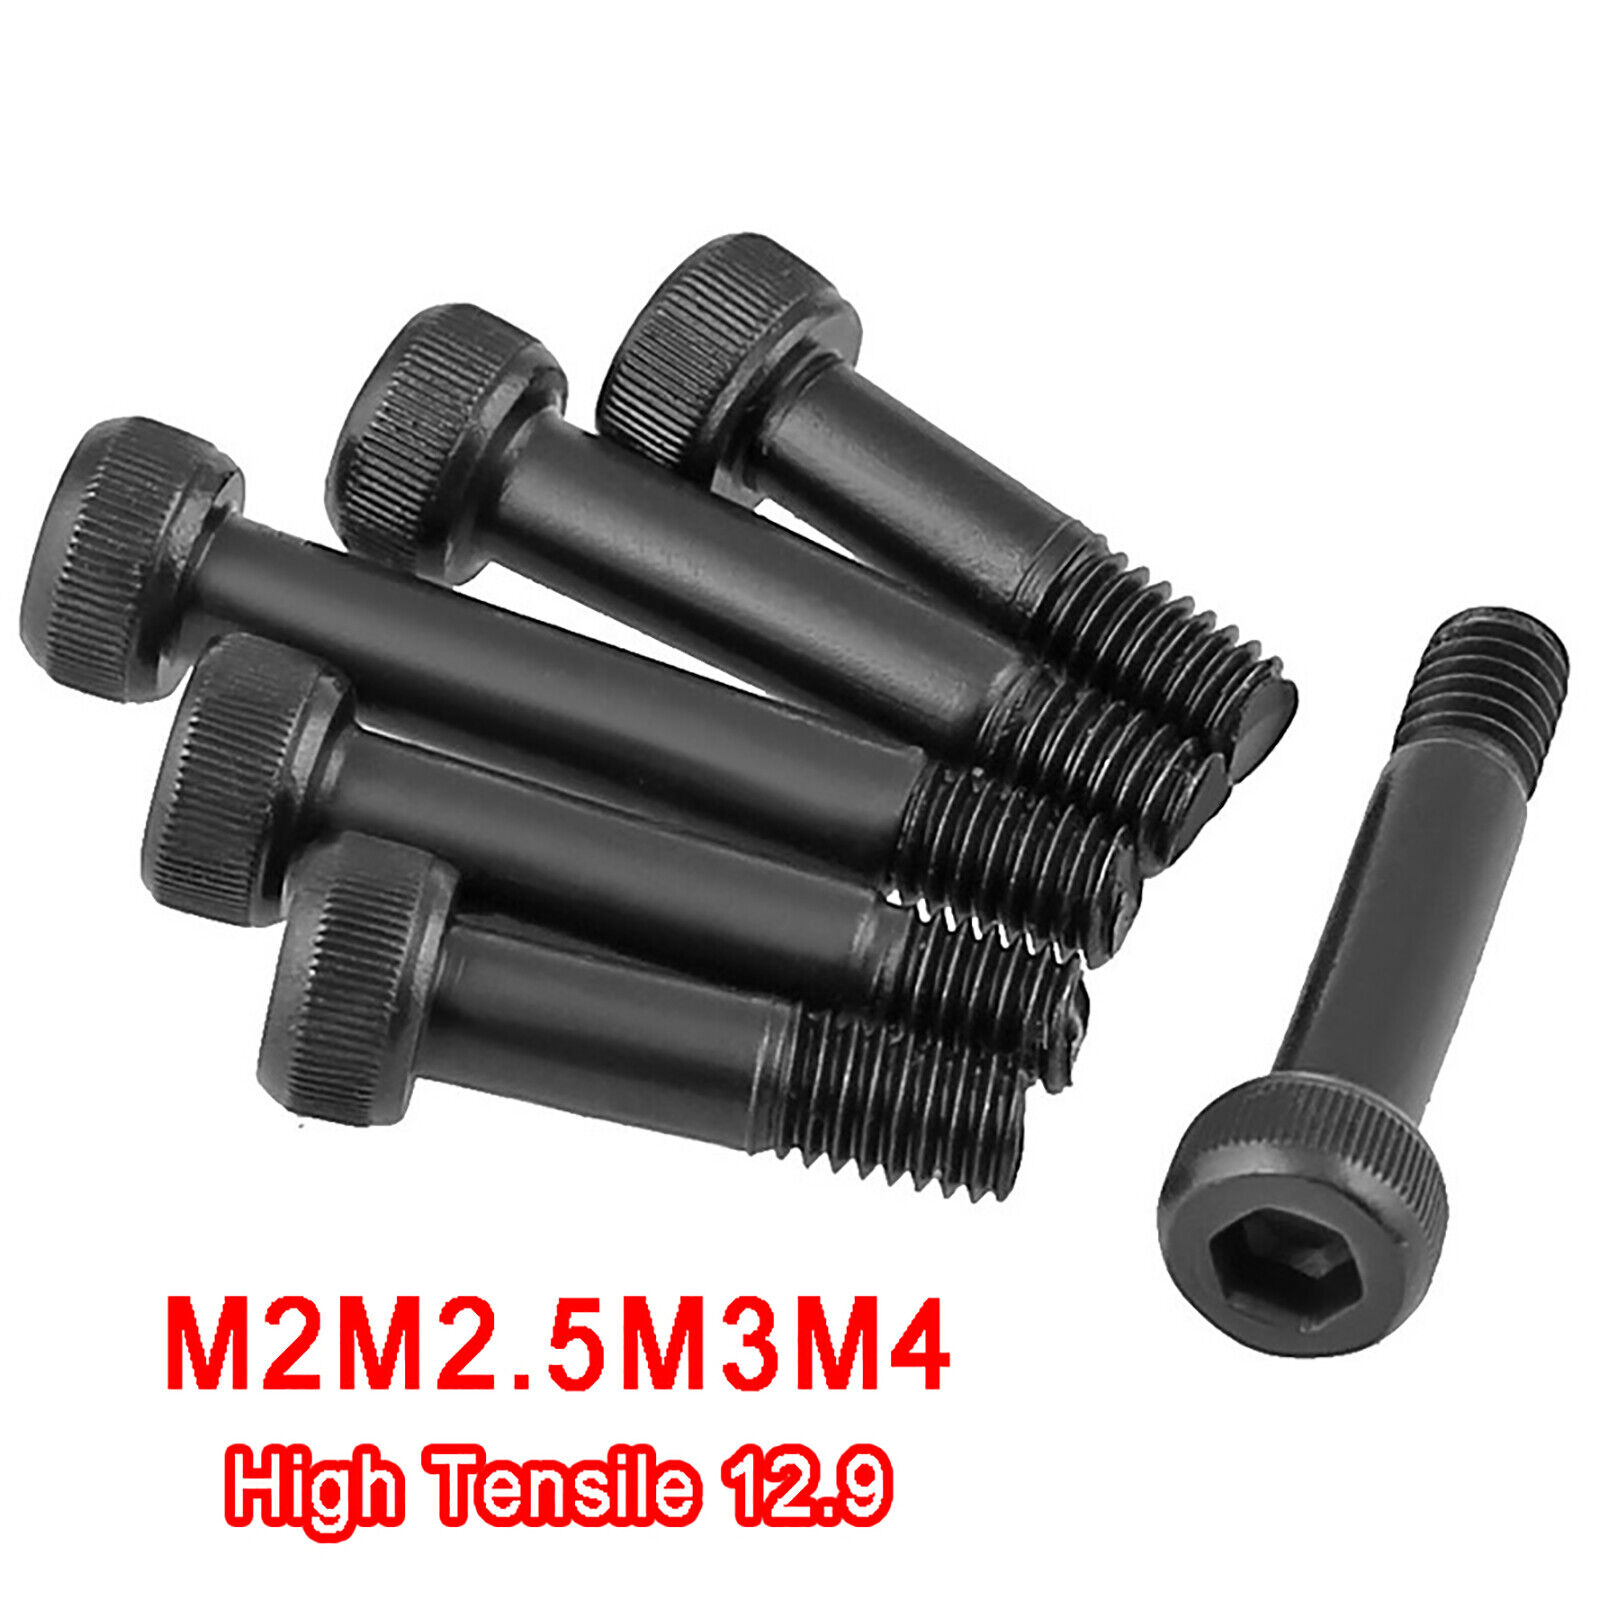 M2M2.5M3M4 High Tensile 12.9 Socket Screws Max 82% OFF Allen Bolts Cap List price Head